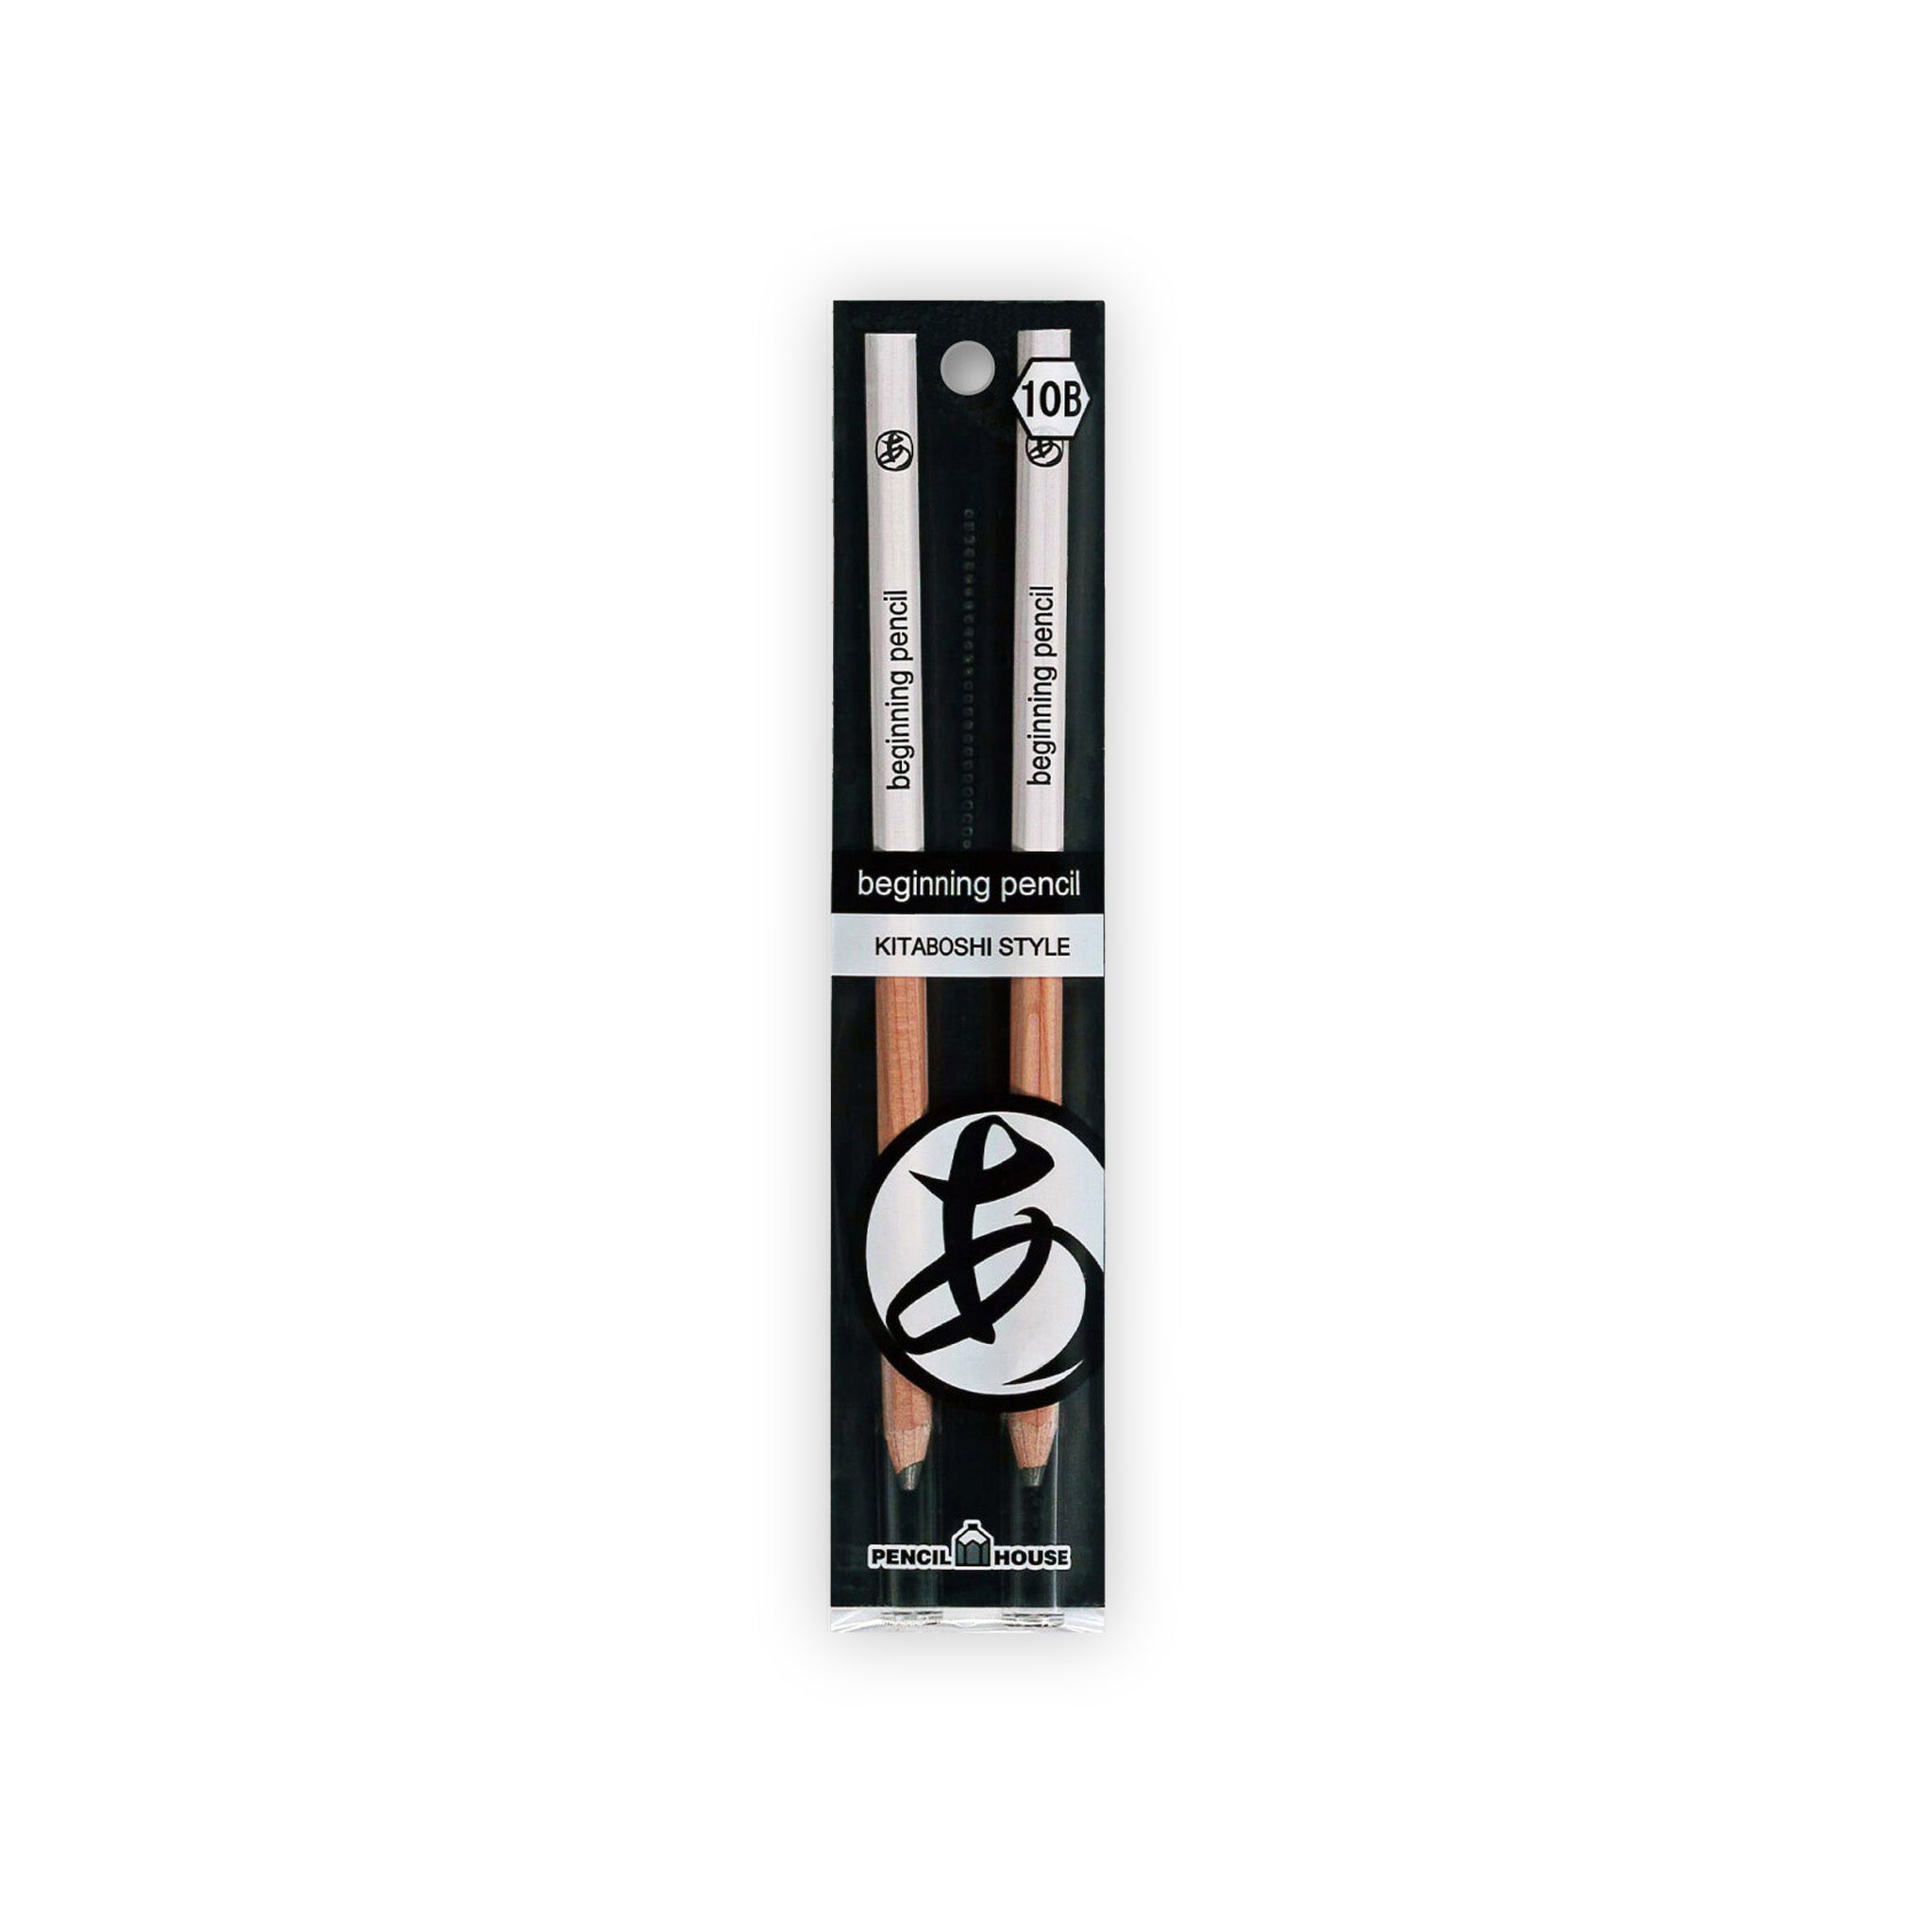 Kitaboshi Beginning Pencil - 10B - Pack of Two – Yoseka Stationery